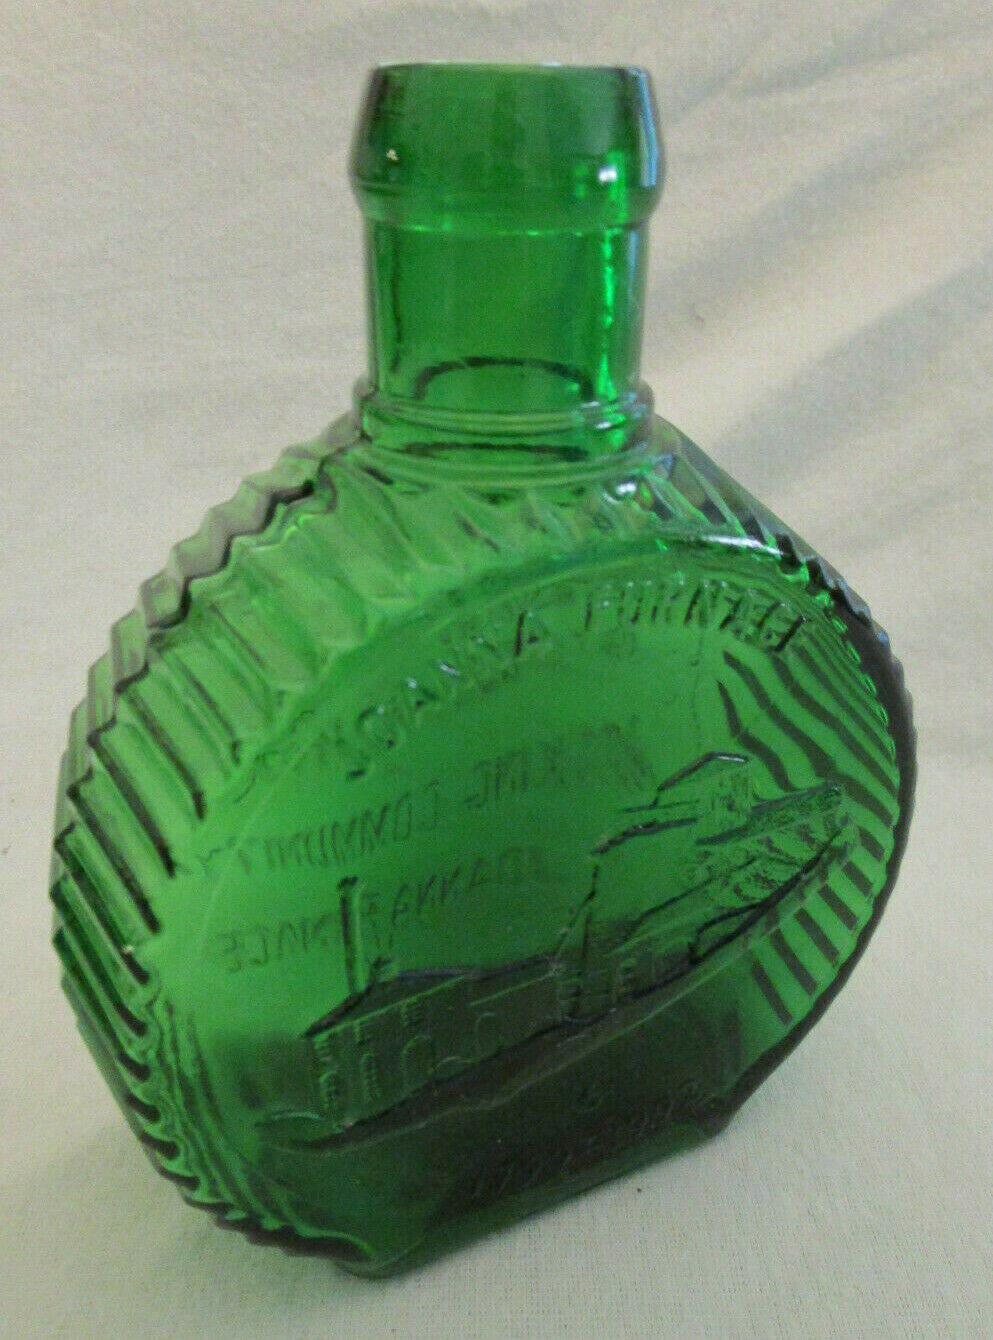 Clavenger Glass Bottle Bank - Joanna Furnace - Green, 1992